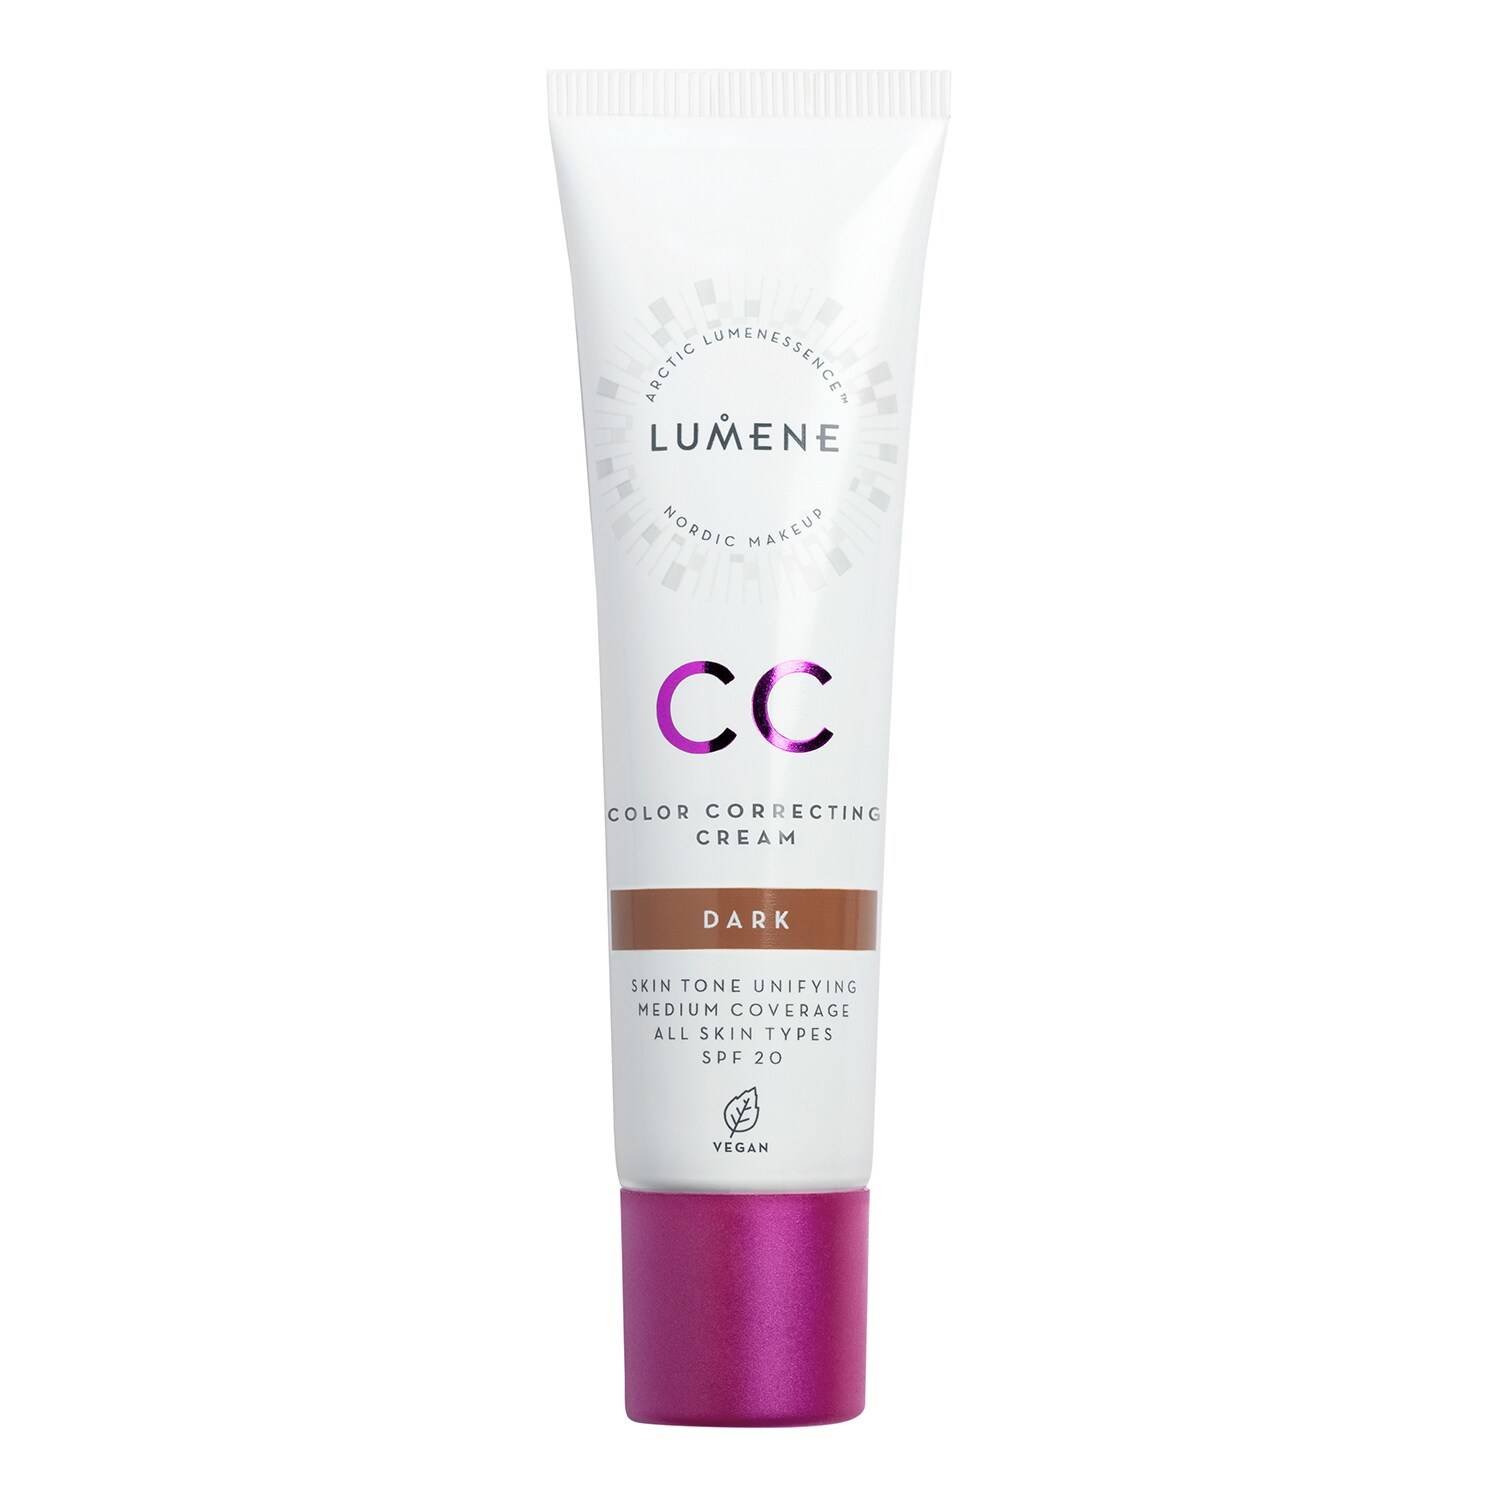 Lumene Cc Color Correcting Cream Spf20 30Ml Shade Dark